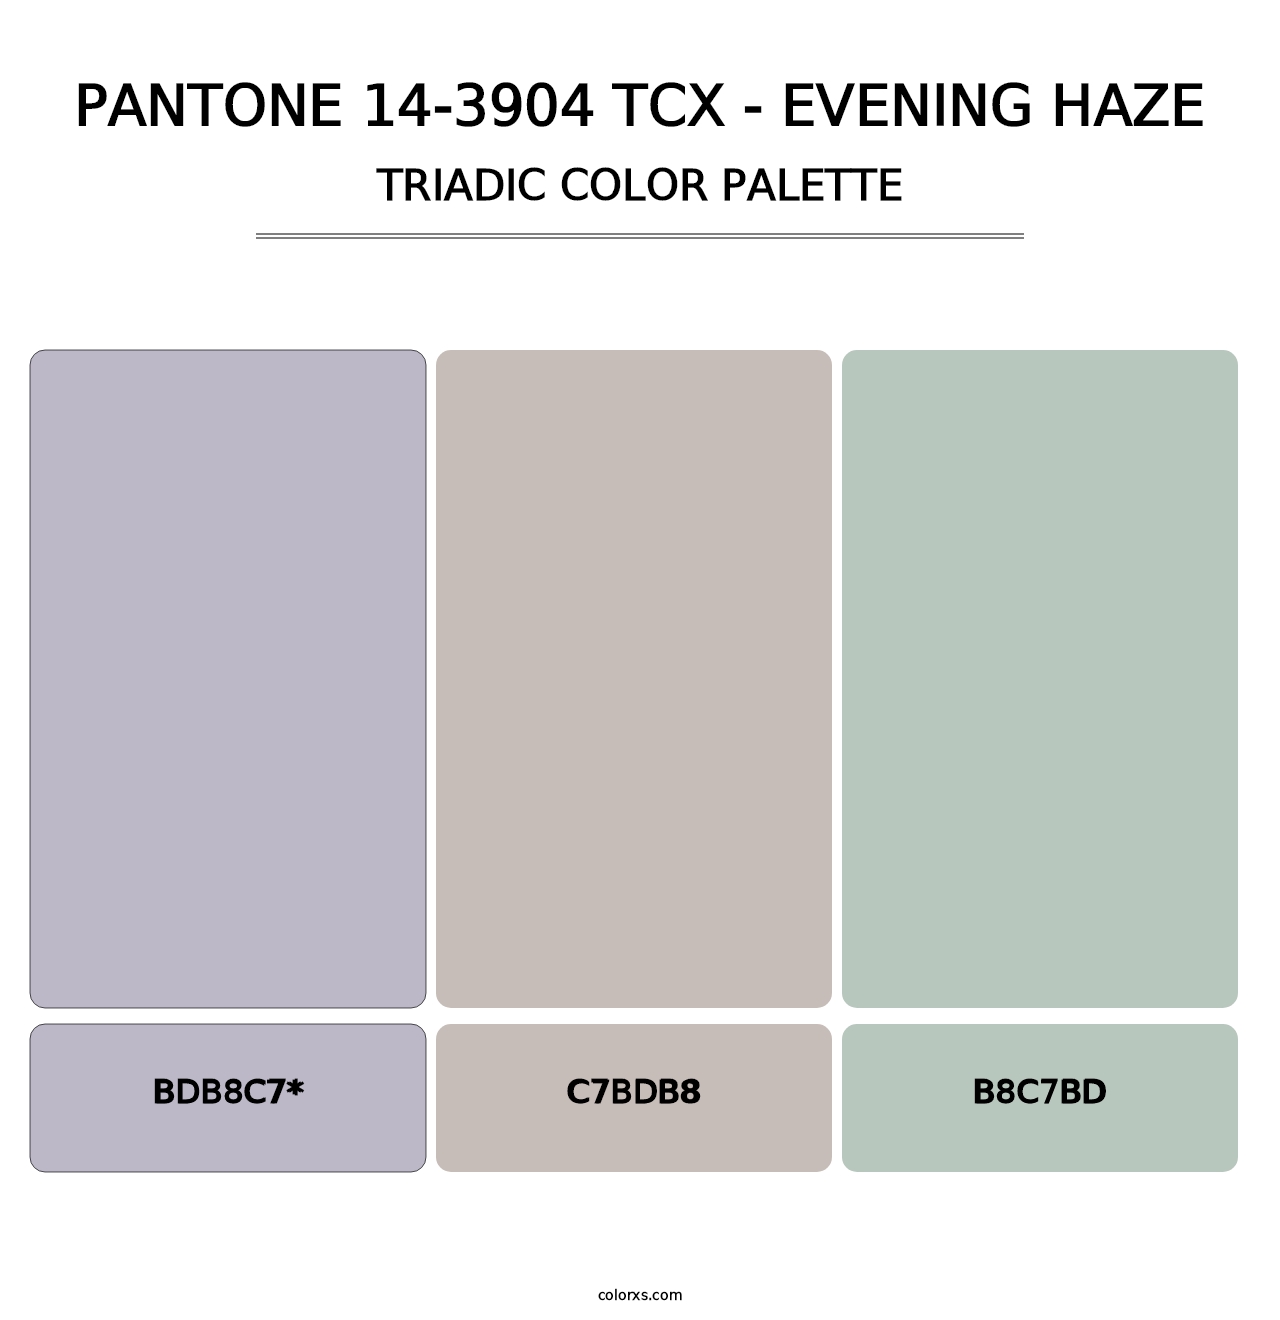 PANTONE 14-3904 TCX - Evening Haze - Triadic Color Palette